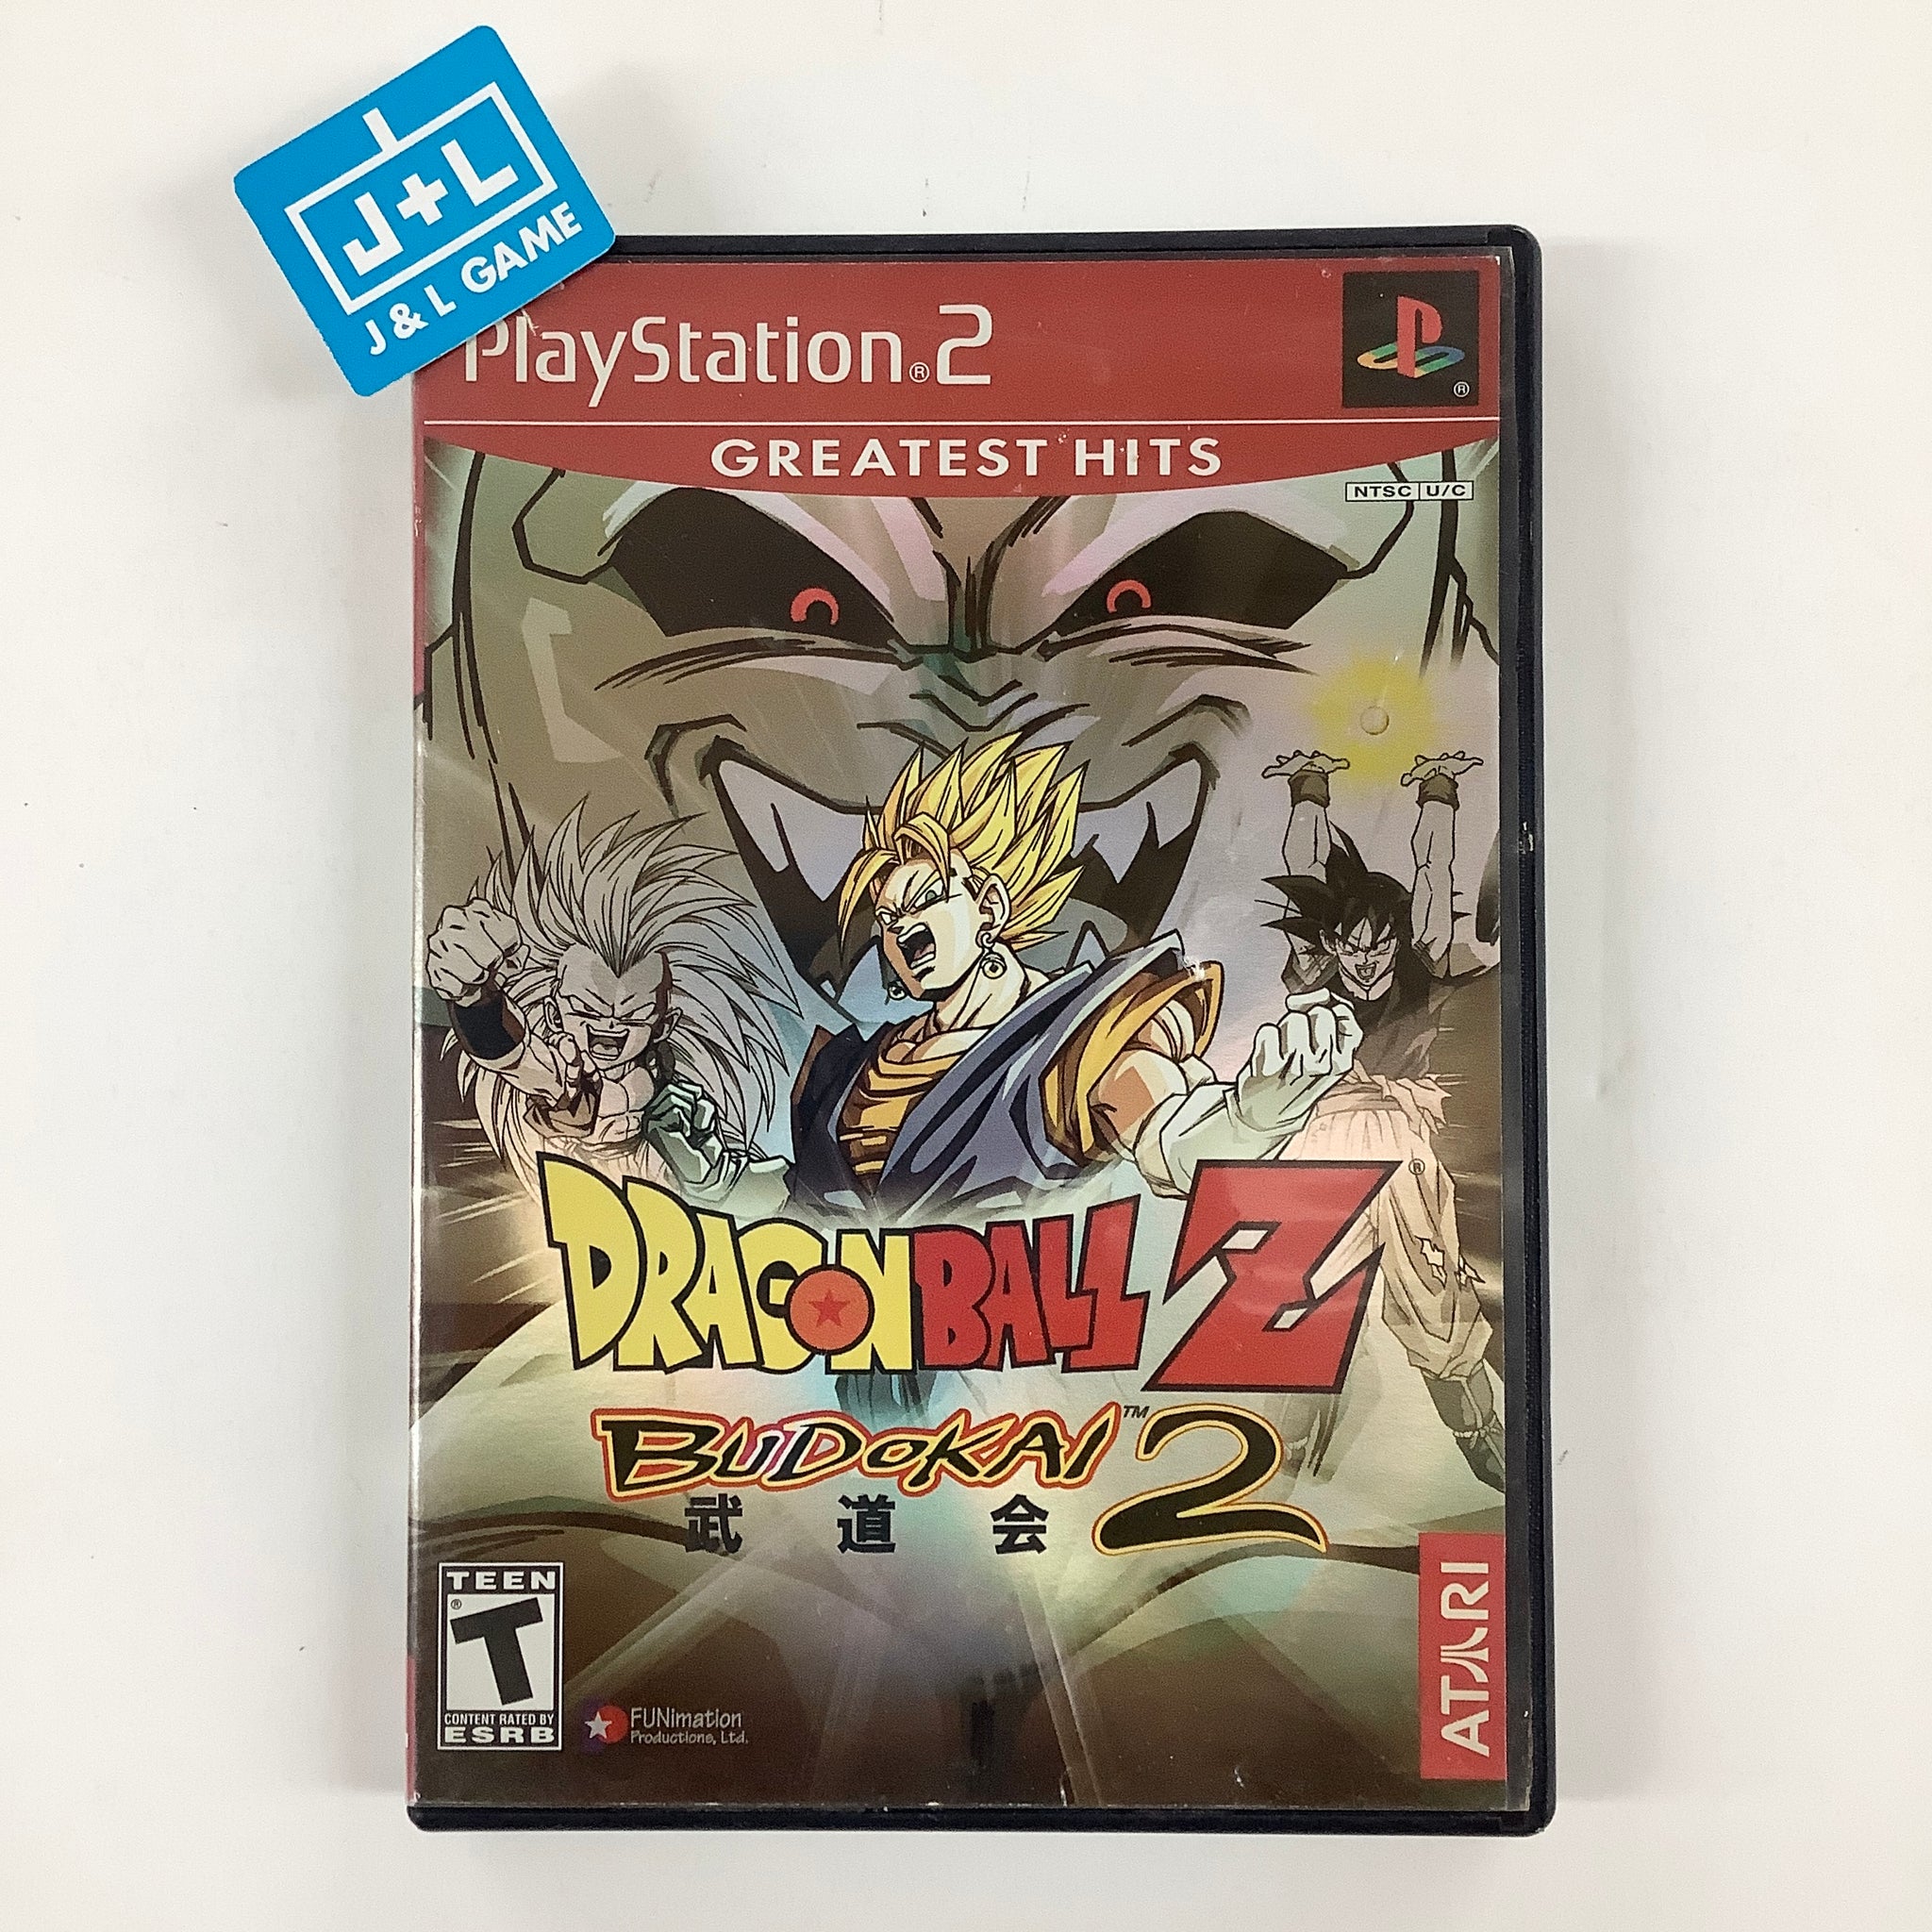 The Enemy - SNK lança trilogia Art of Fighting para PS2